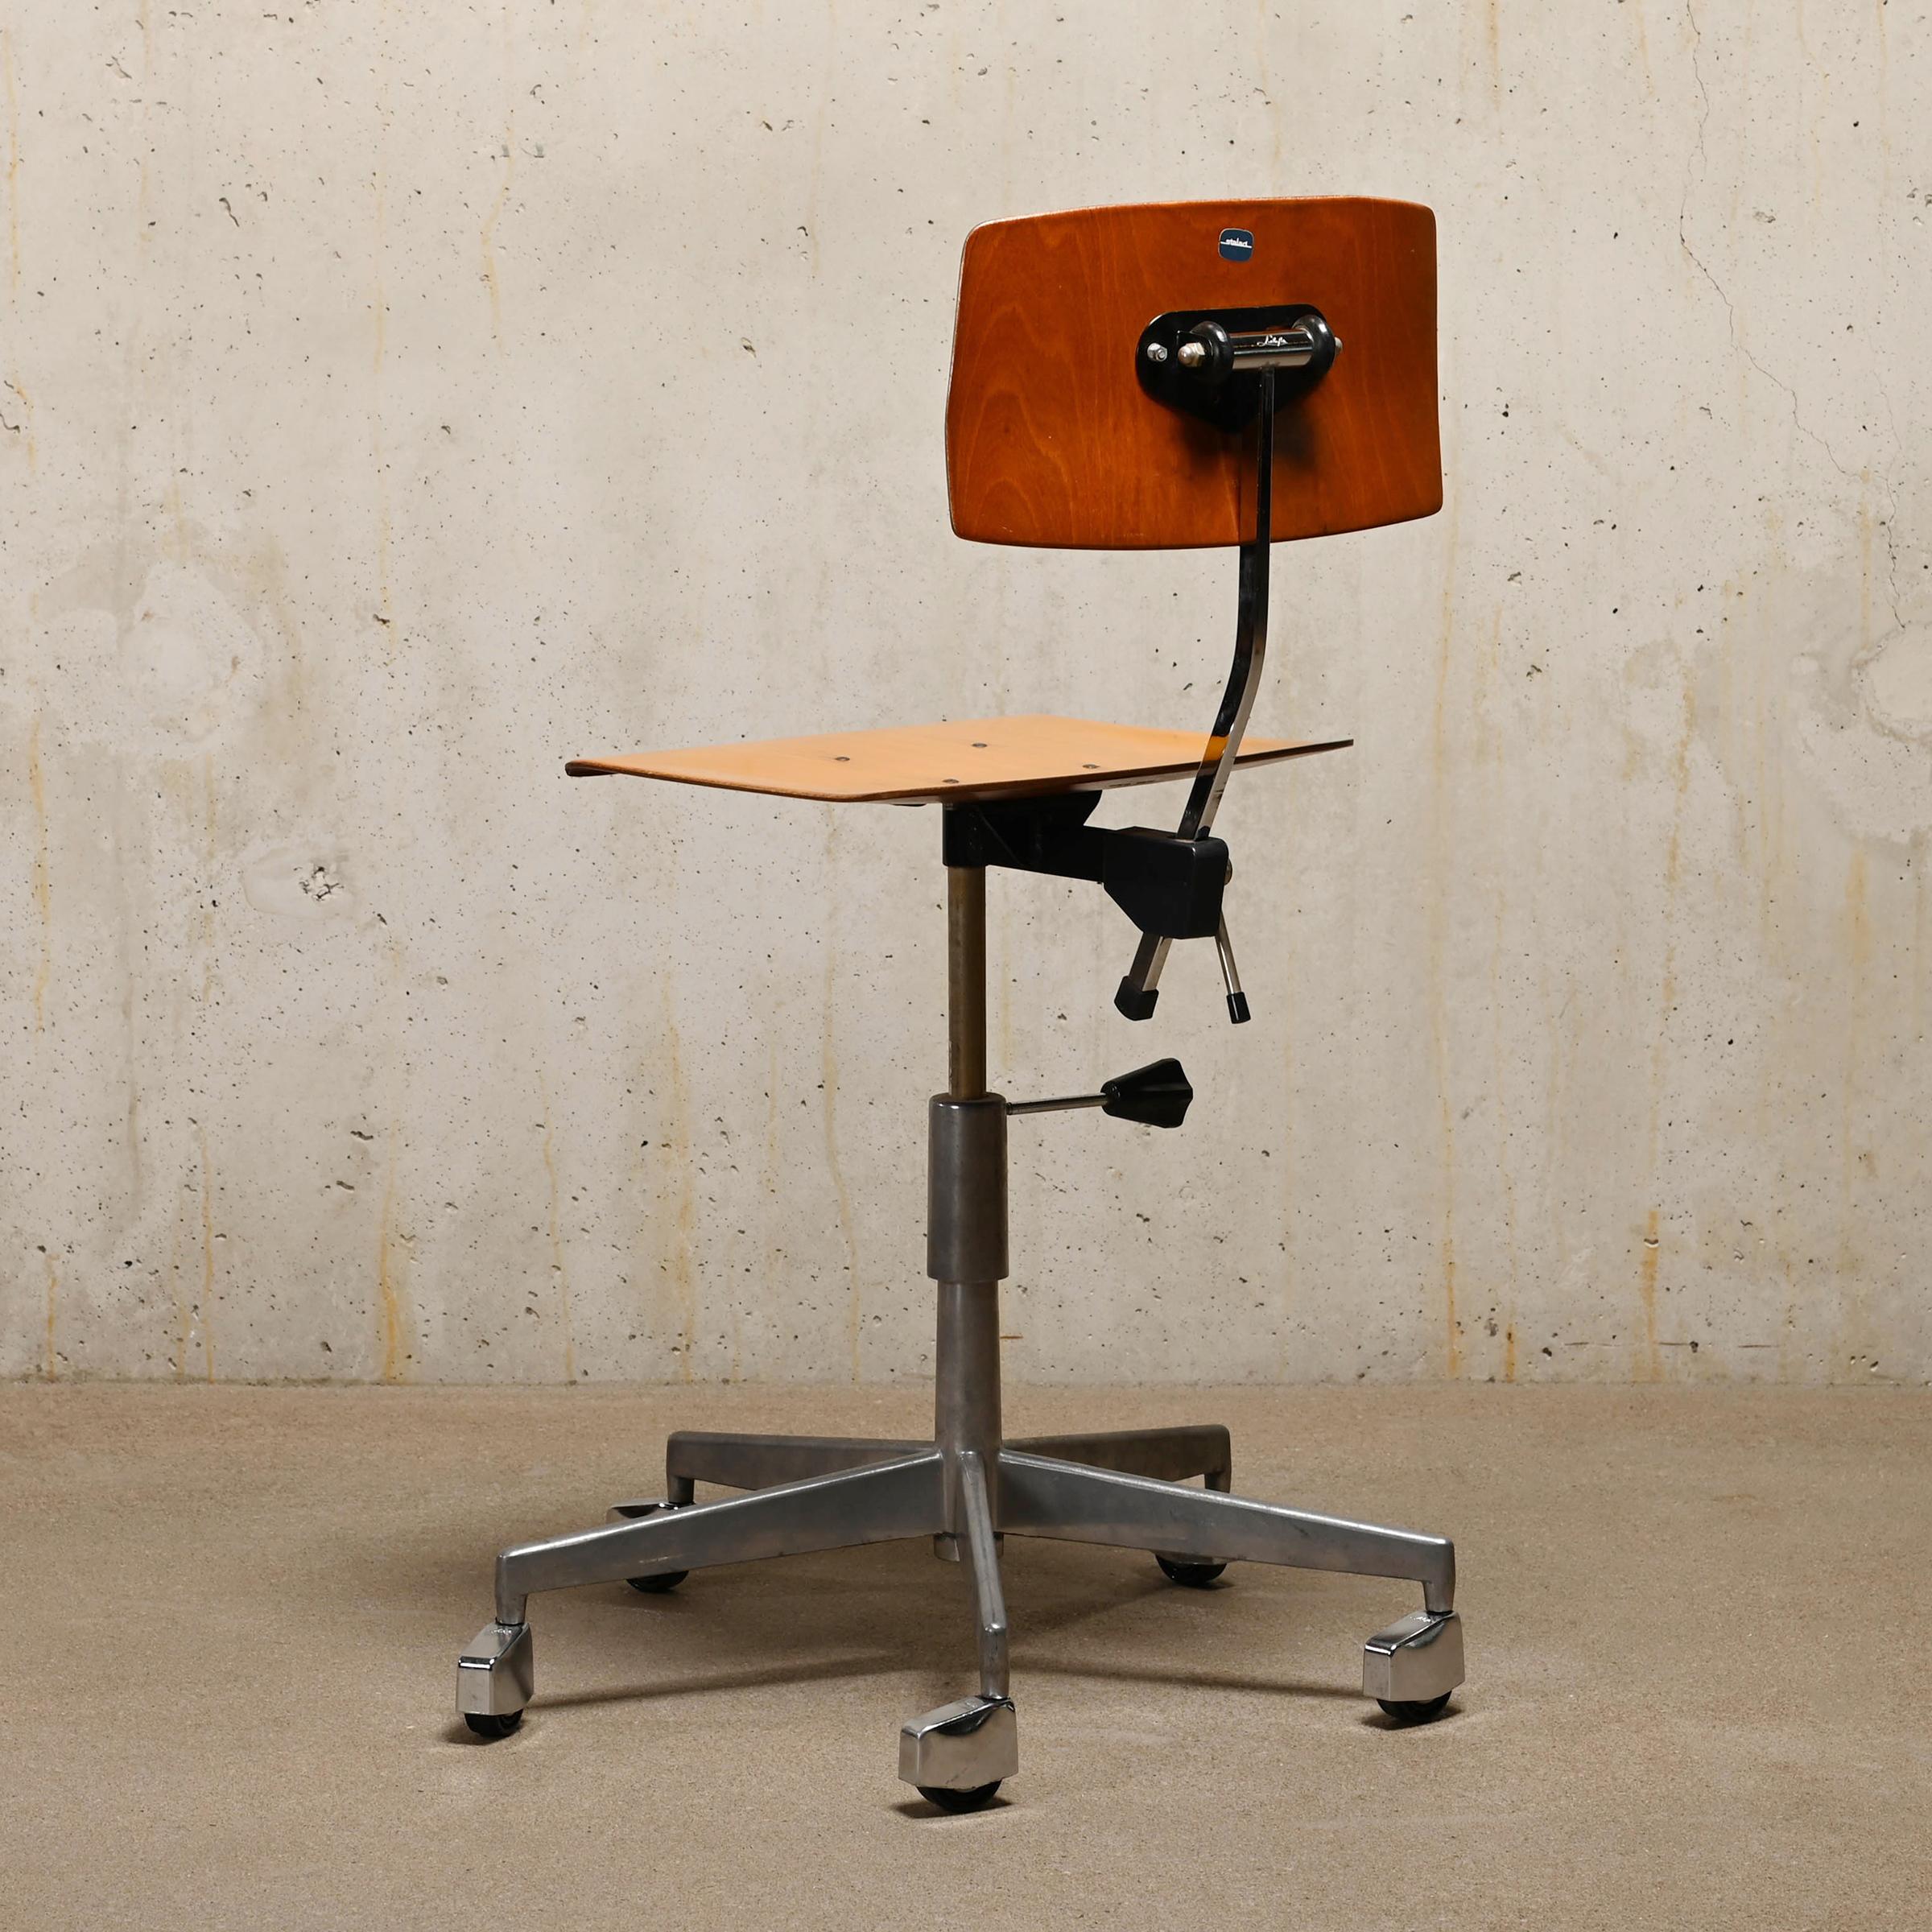 Danish Jørgen Rasmussen Industrial Office / Desk Chair in Light Wood for Labofa